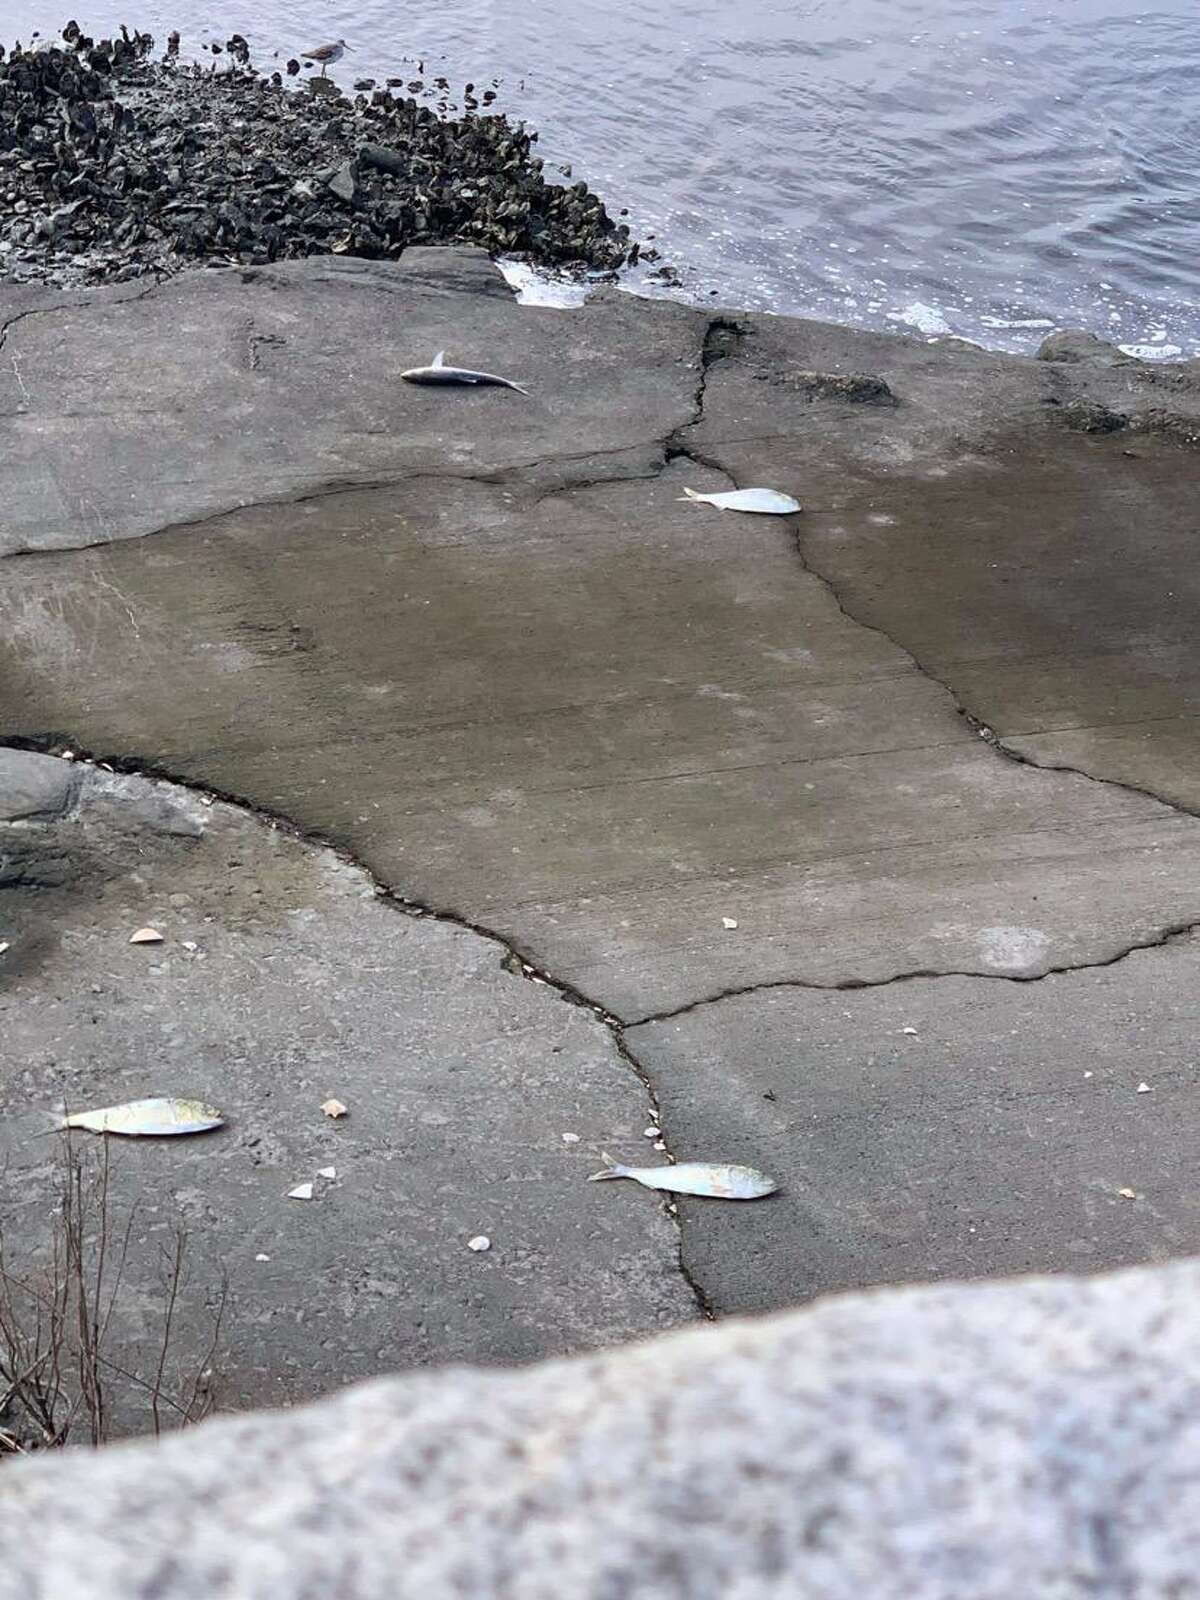 Dead fish are washing ashore in Darien and surrounding area.